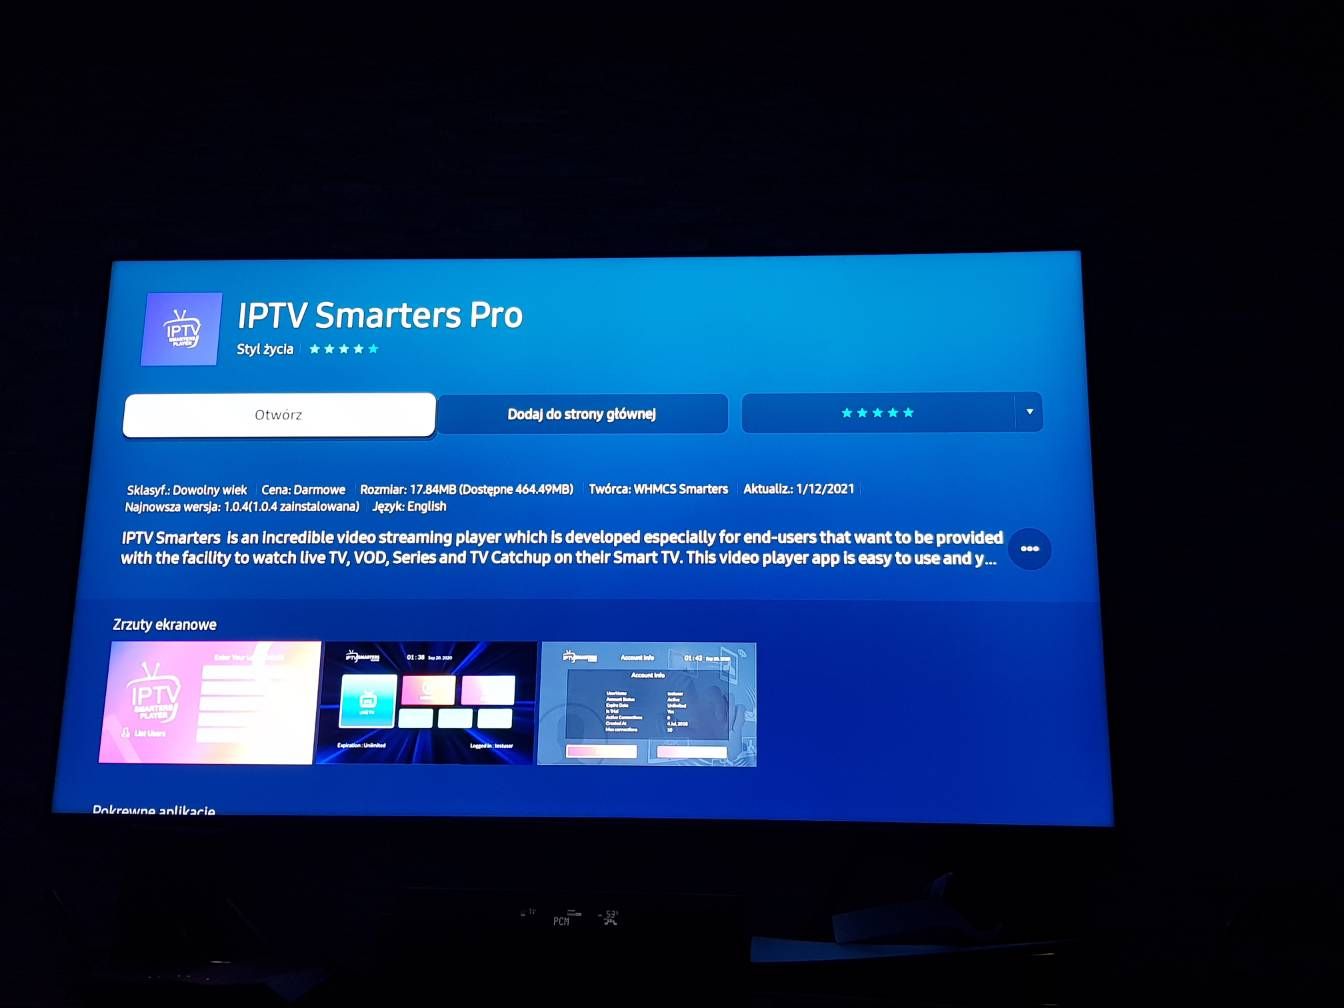 IPTV Smartes Pro - Samsung Community